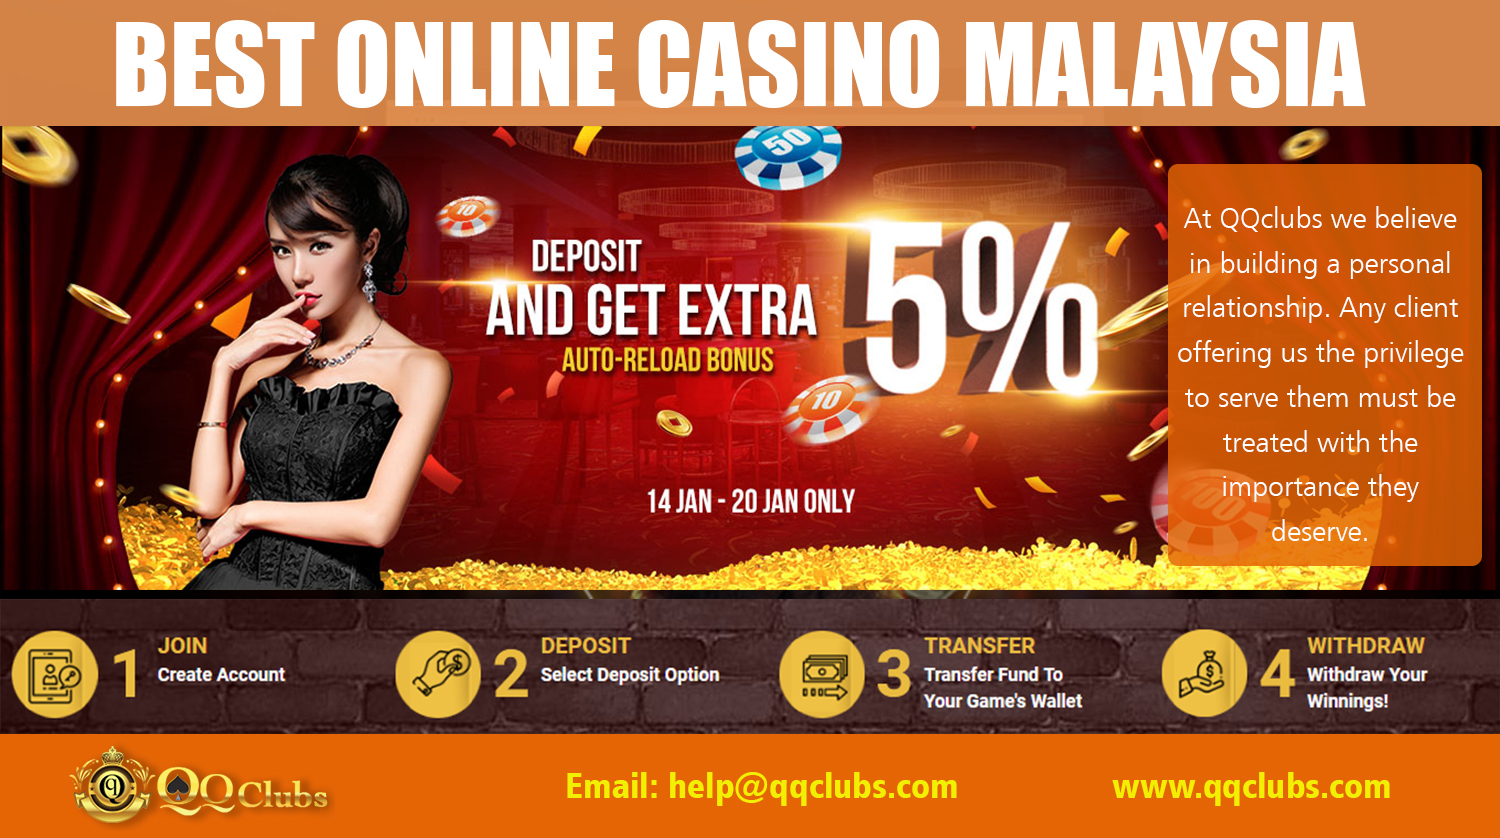 Online casino malaysia ranking forum pokerdom сайт joycasino digital